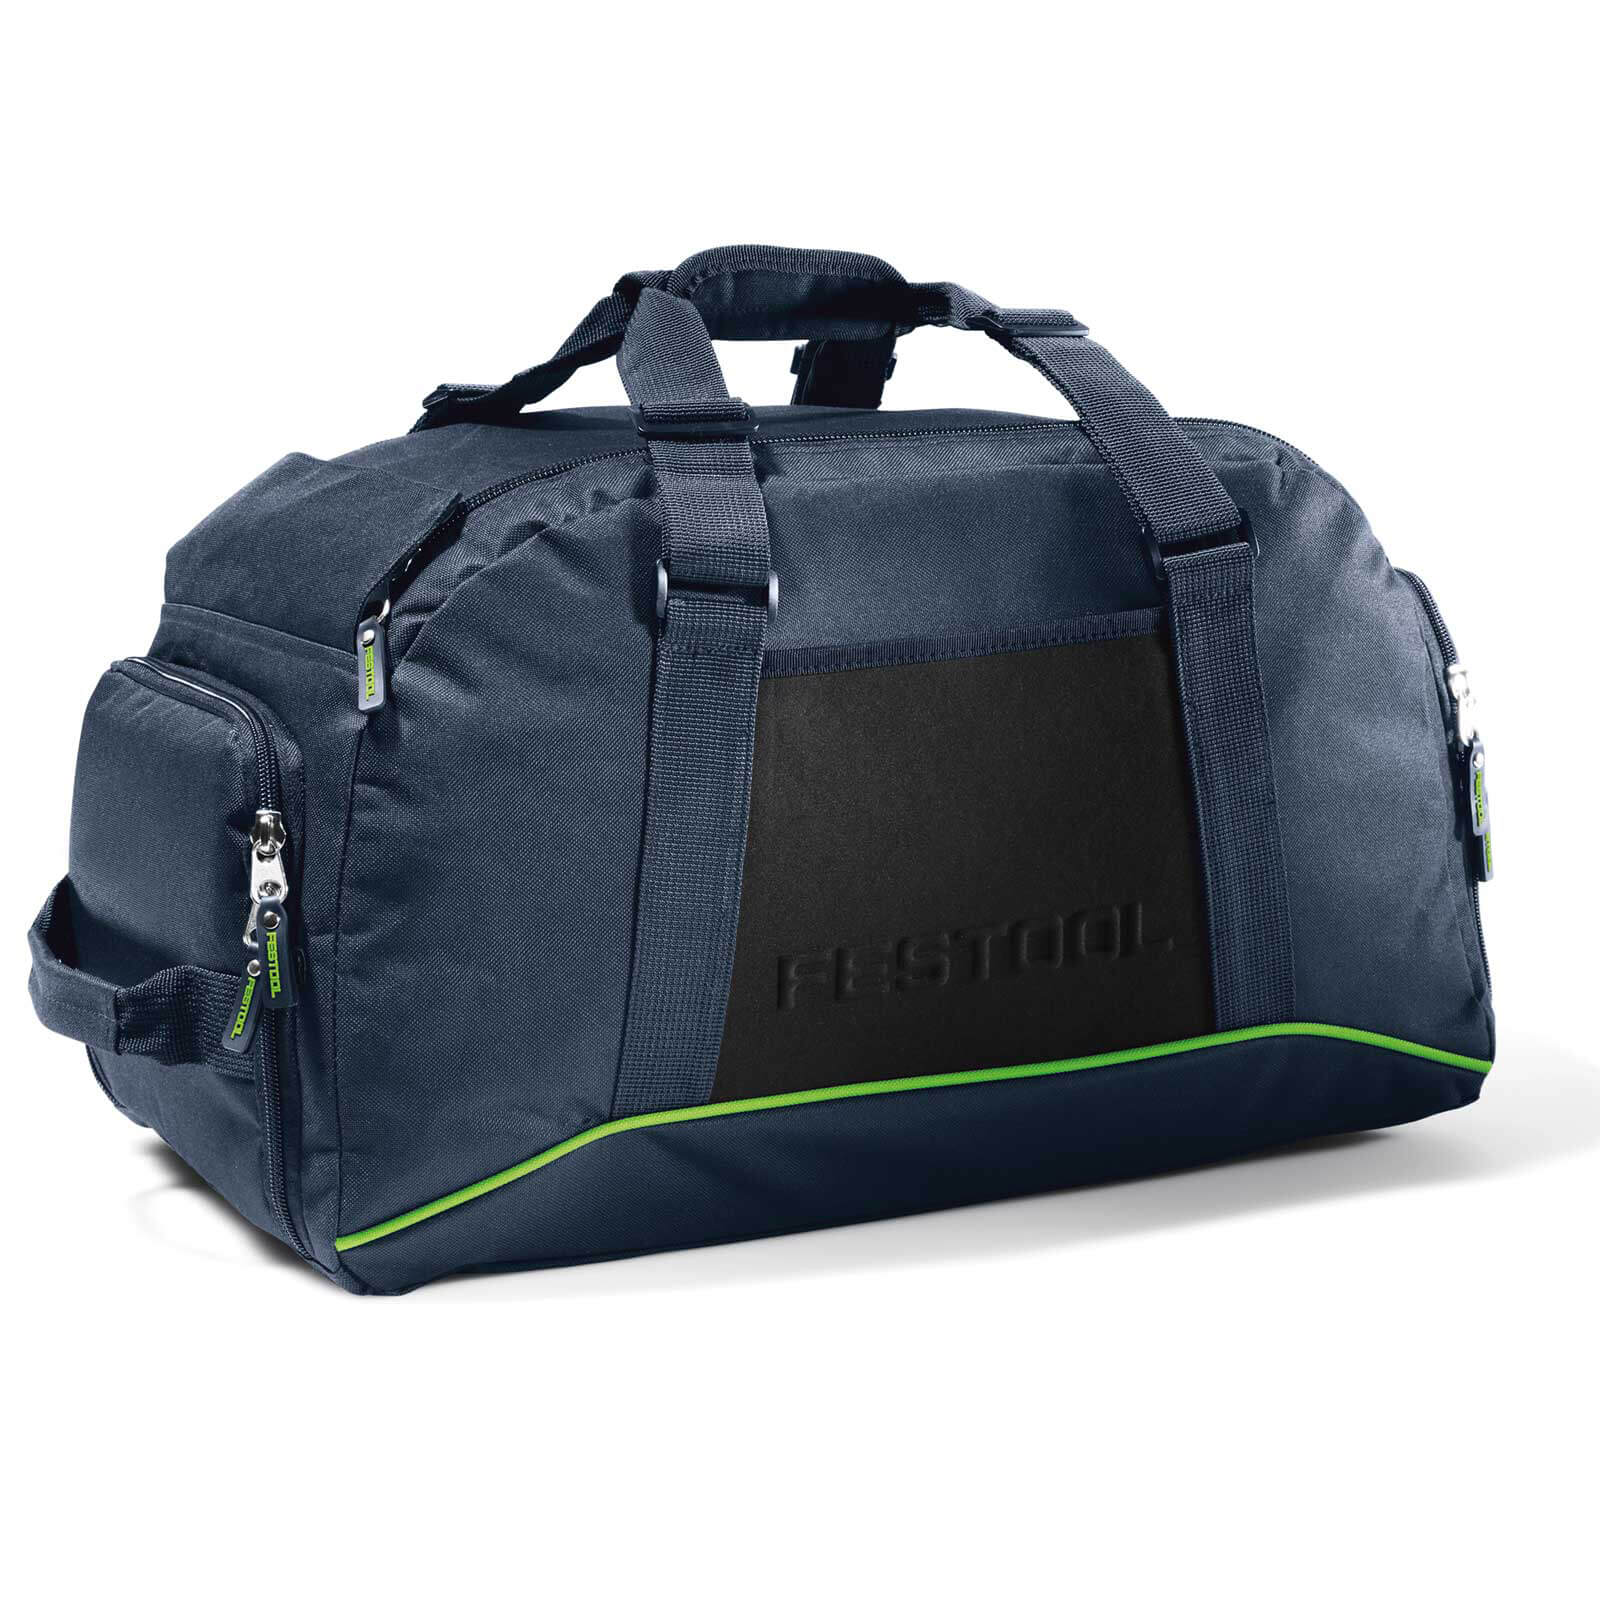 Festool Sports Bag